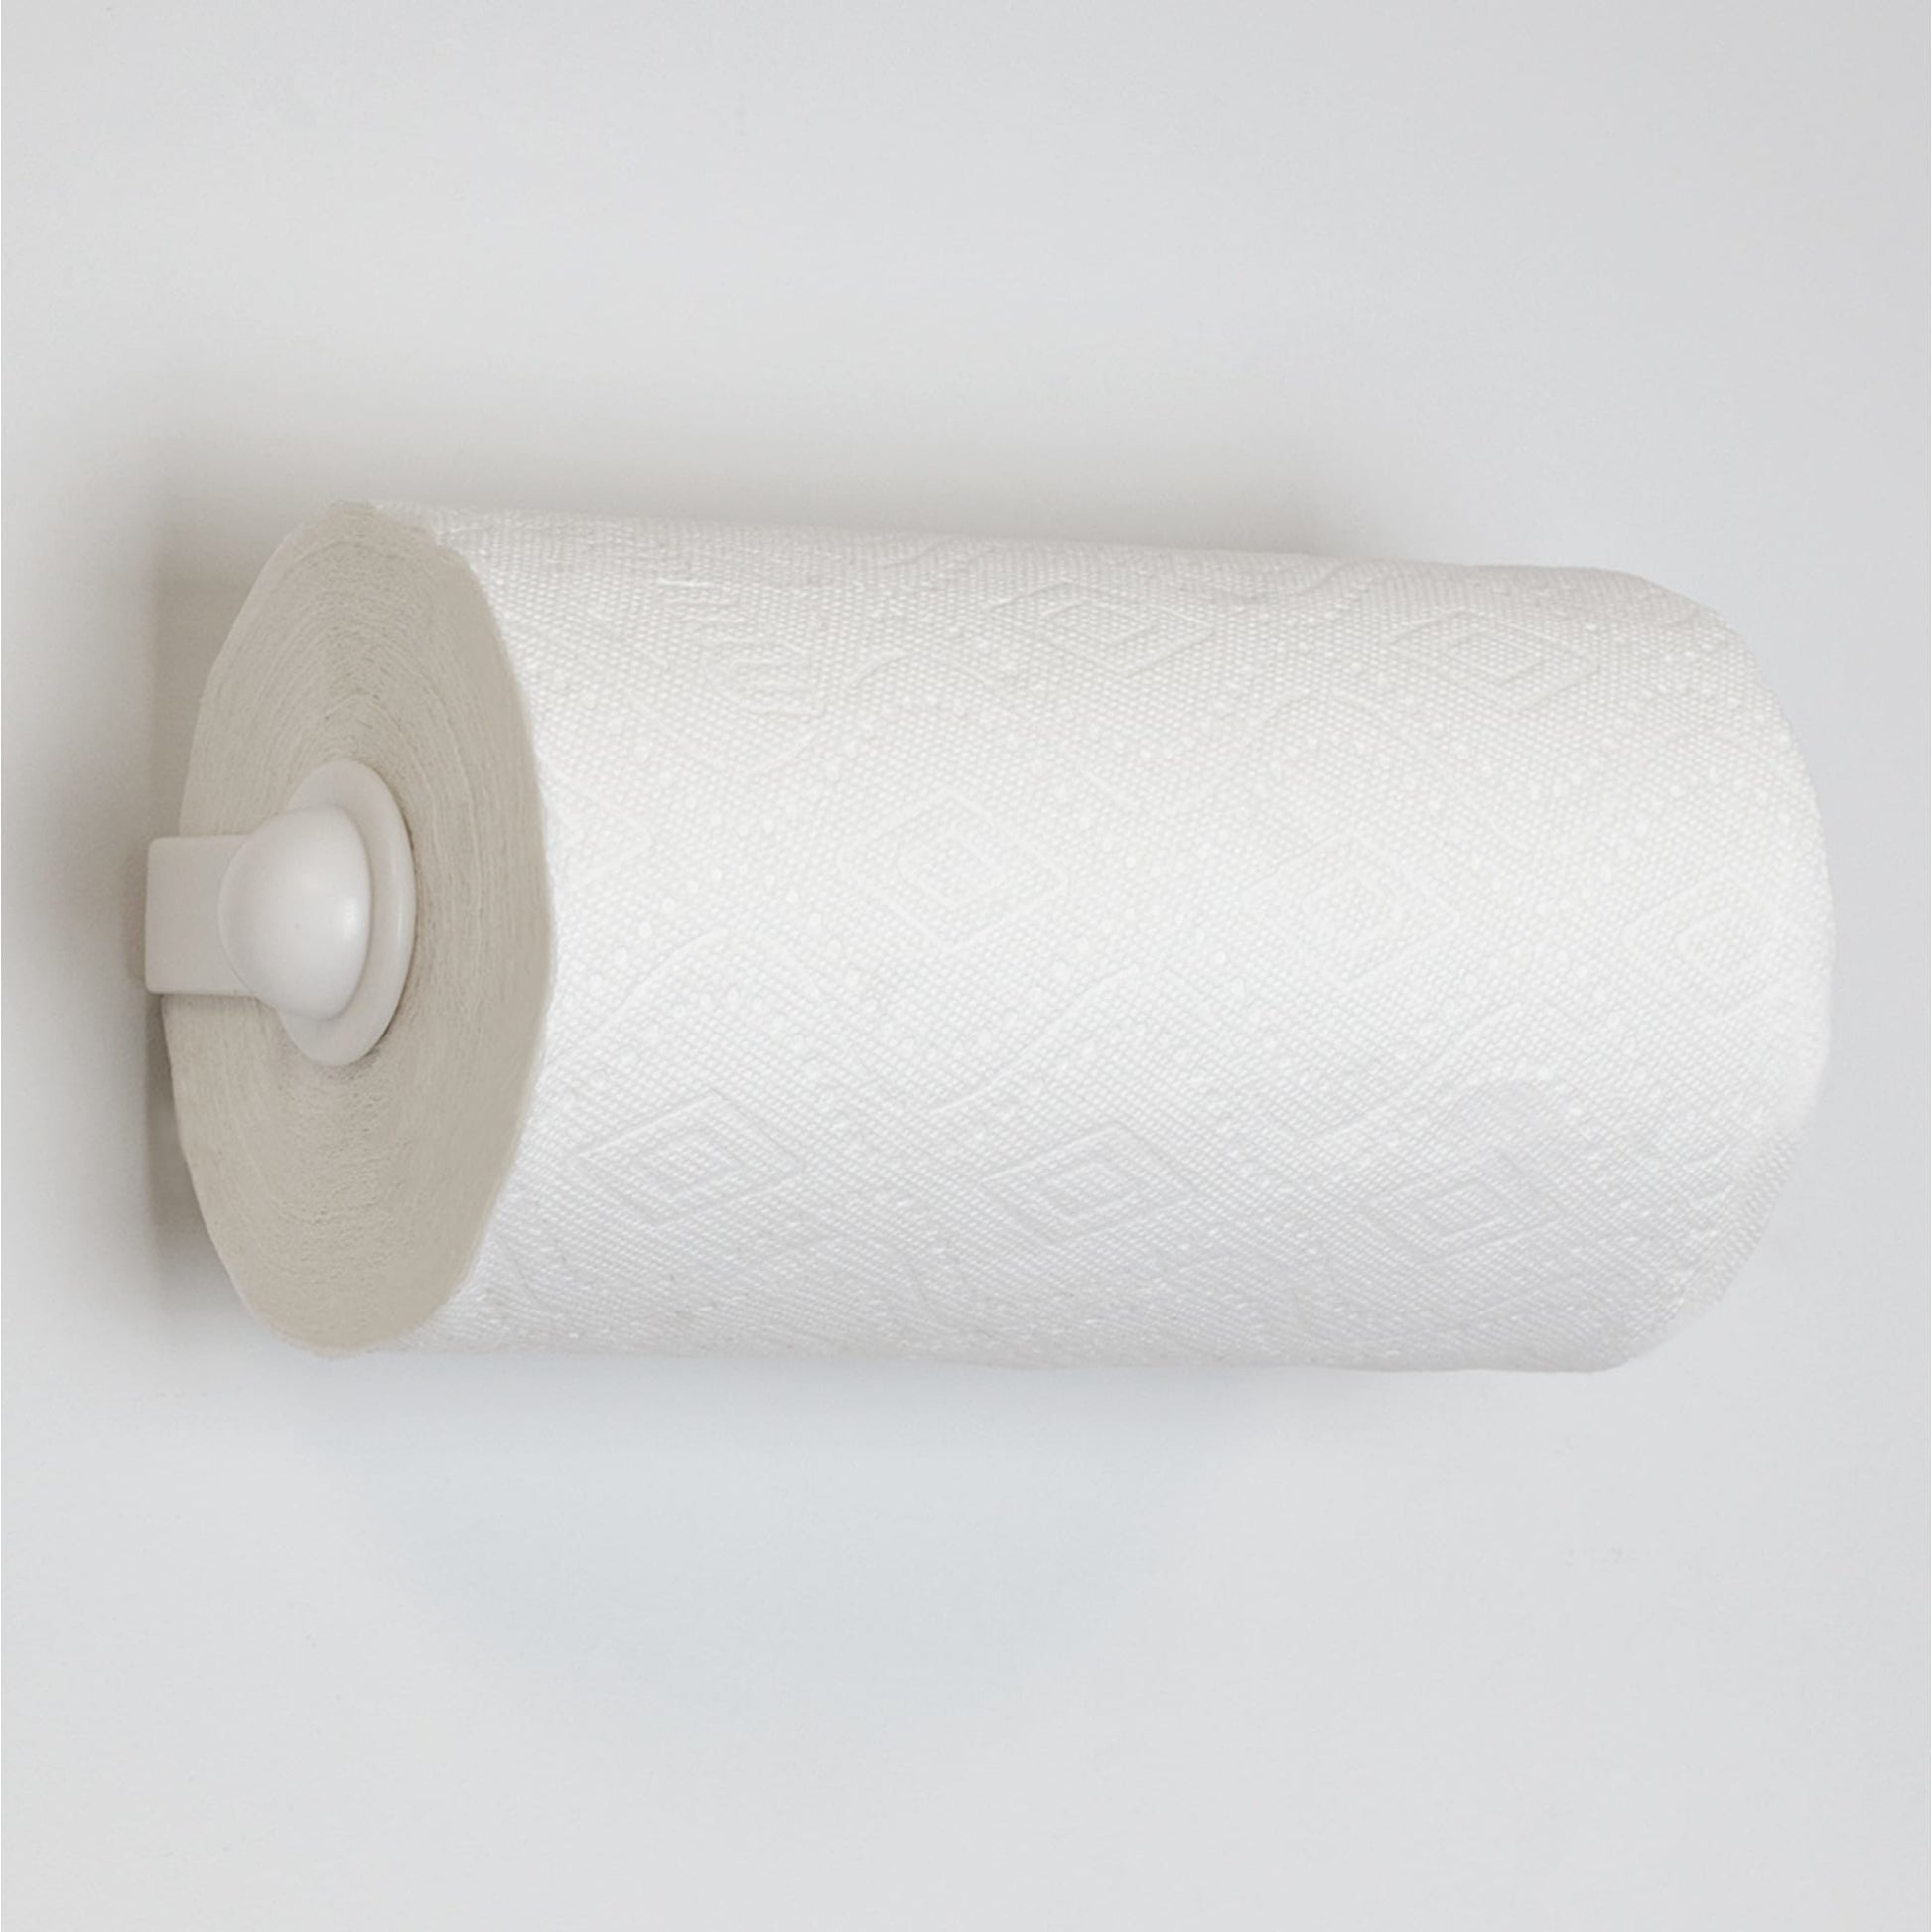 Rebrilliant Plastic Wall / Under Cabinet Mounted Paper Towel Holder